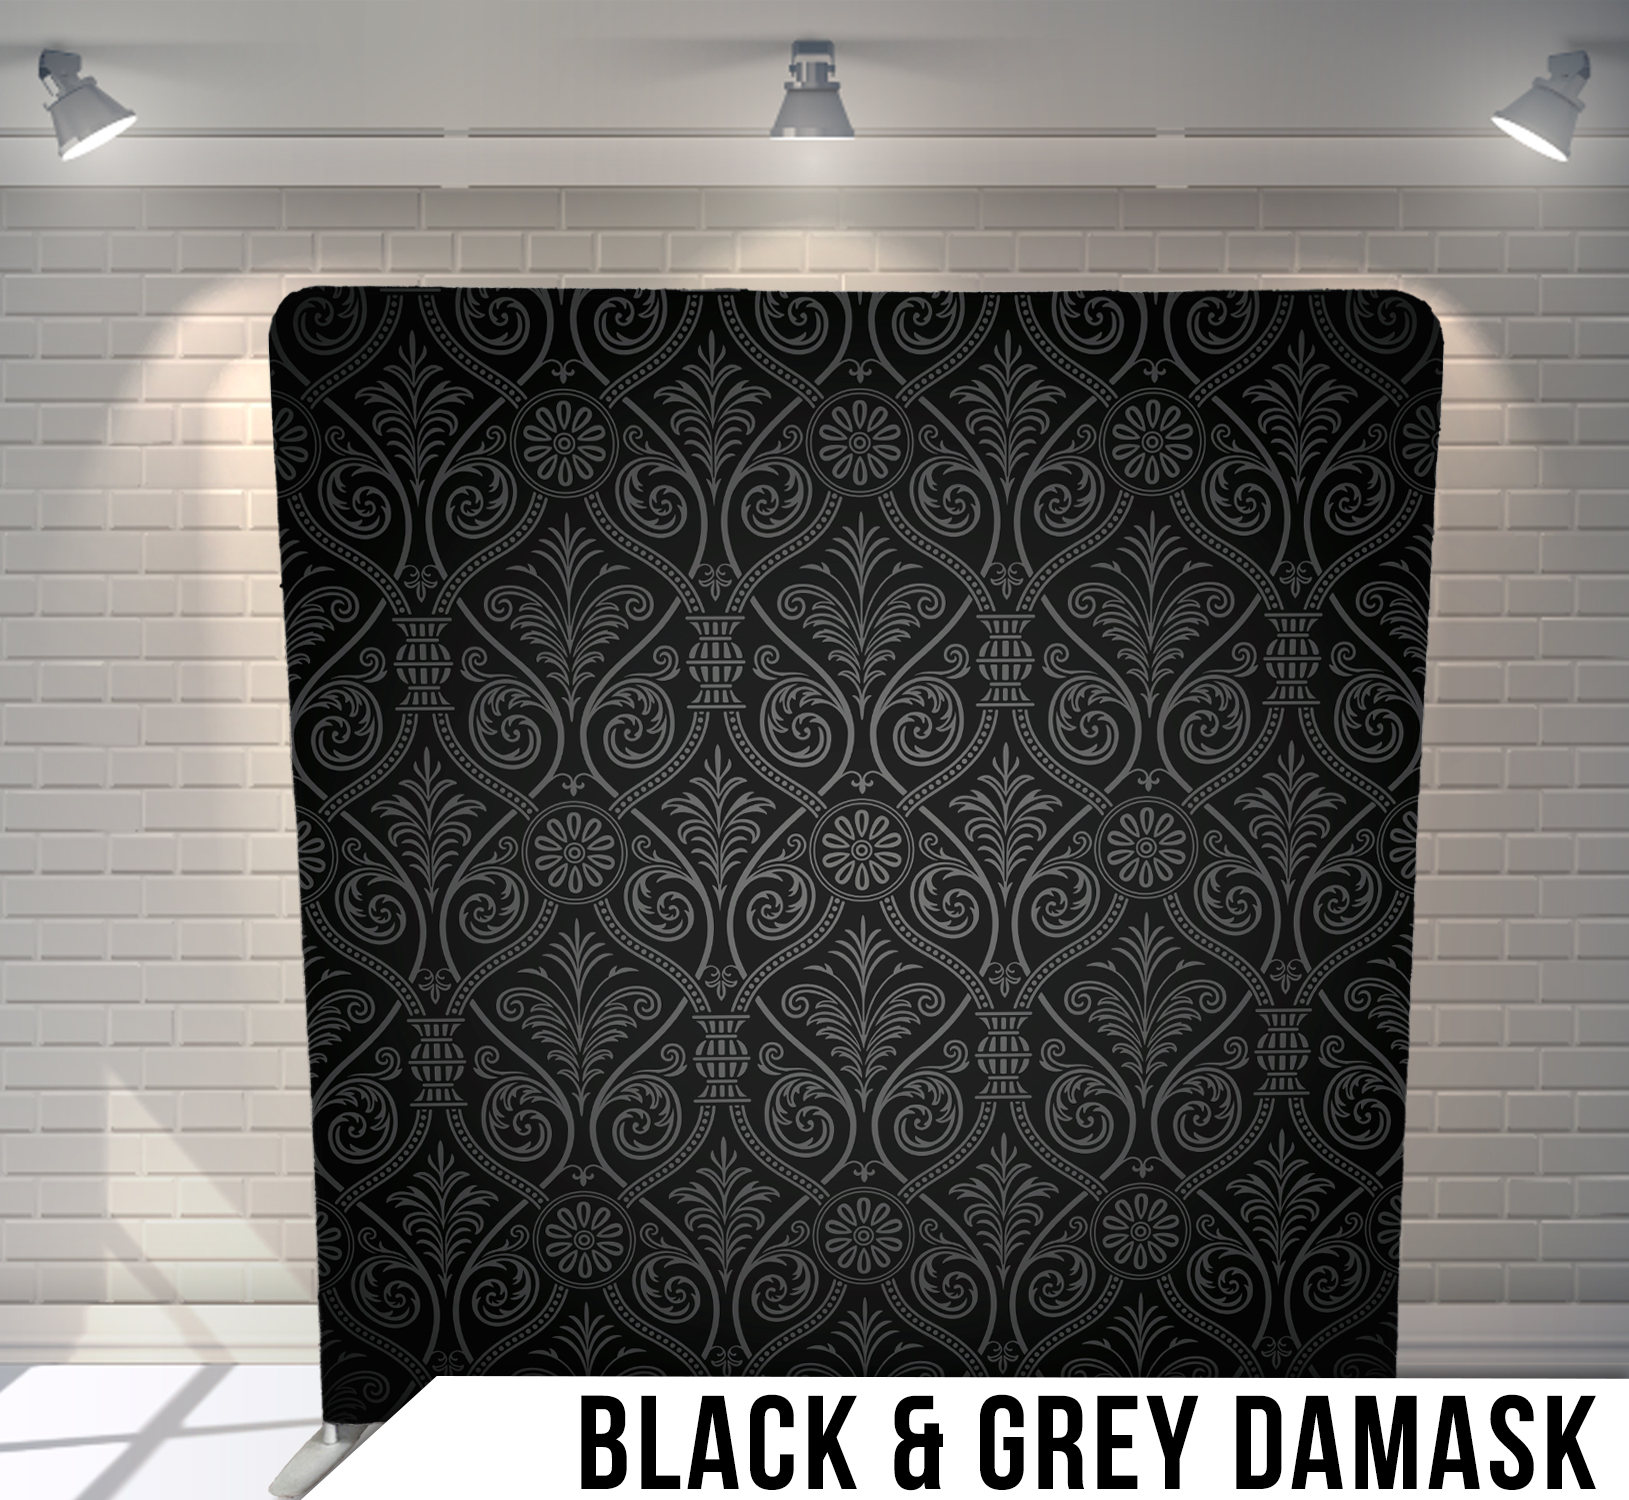 Black & Grey Damask backdrop on backdrop stand